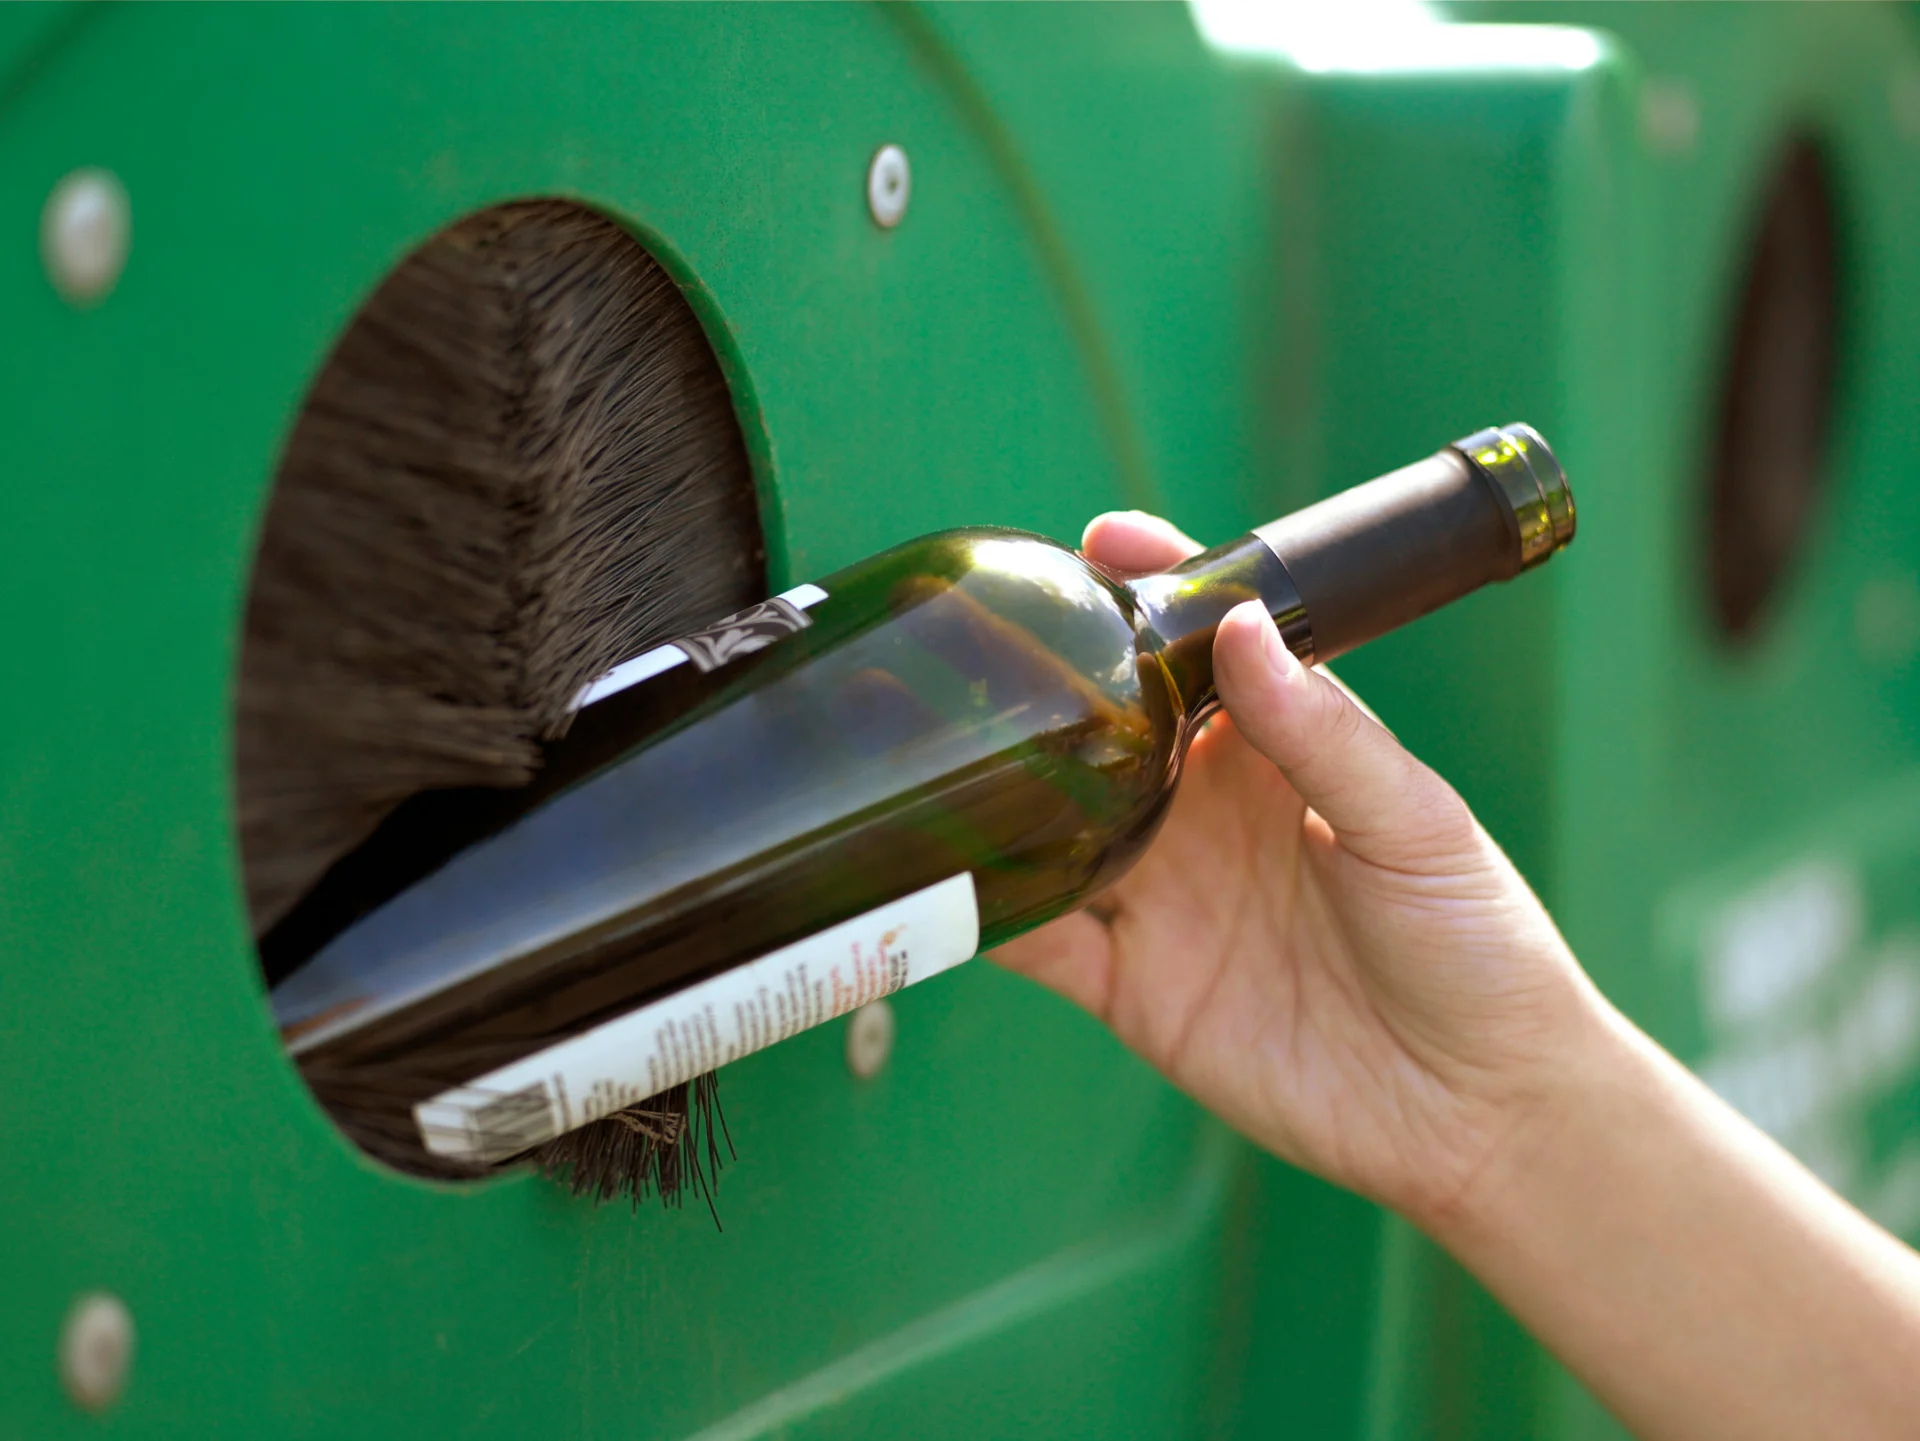 A hand puts a green bottle in a glass trash bin